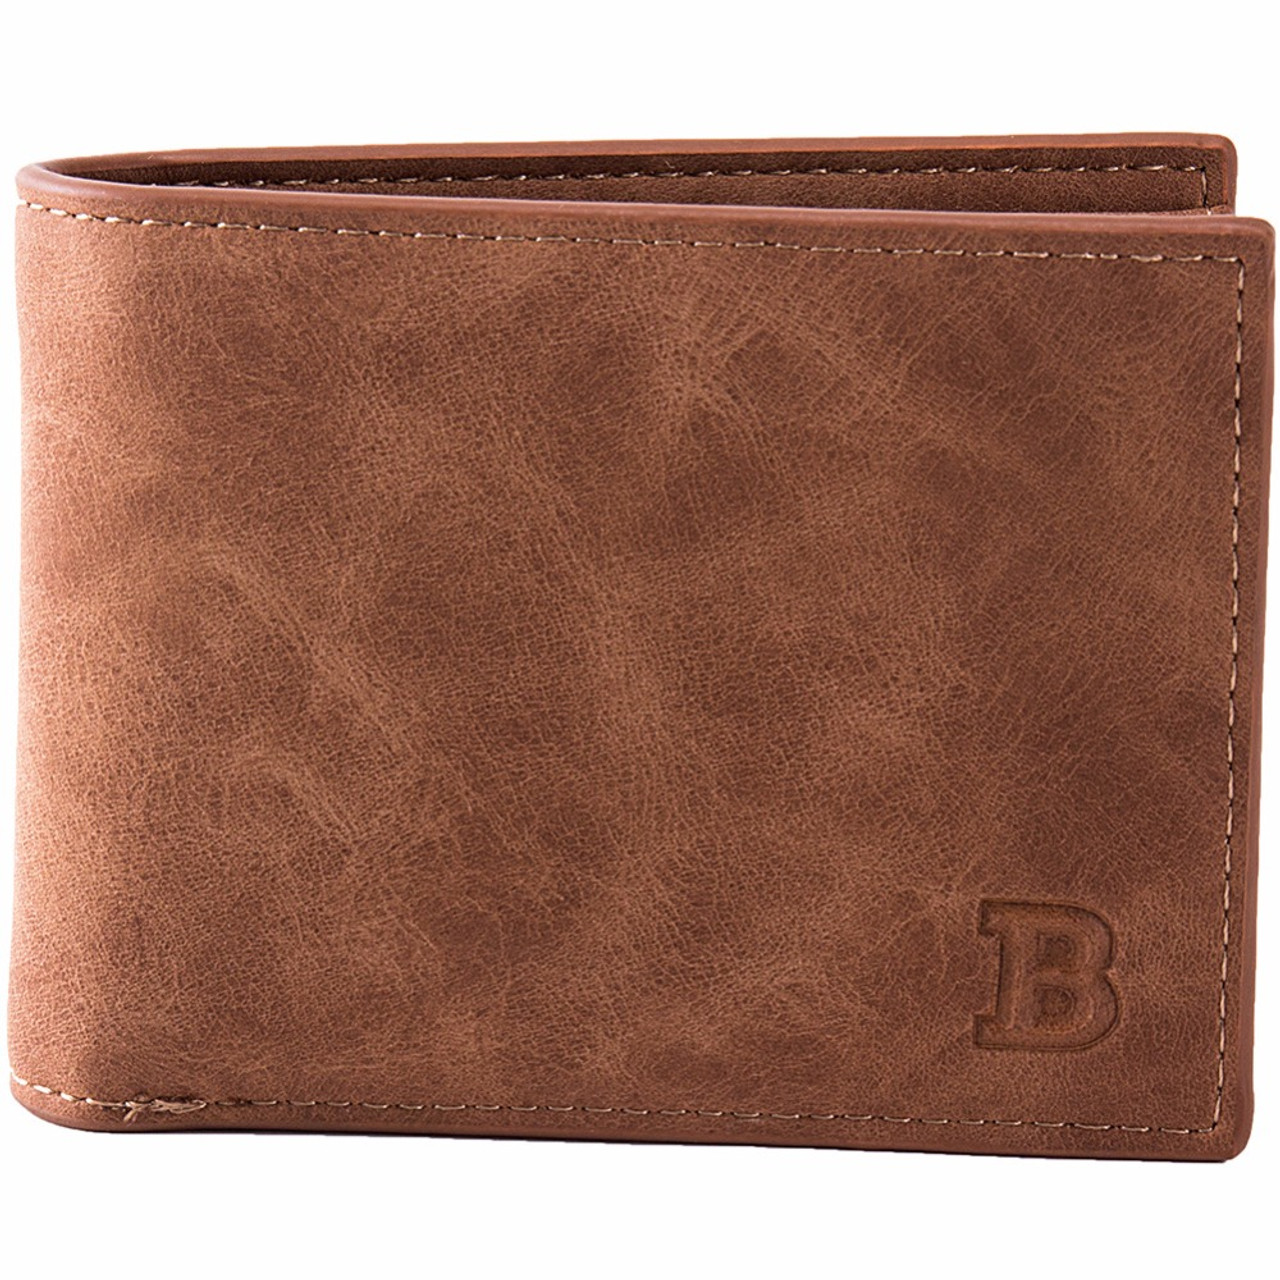 Men Wallets Top Pu Leather Vintage Design Purse Men Brand Famous Card holder Mens Wallet carteira 28287.1529125960